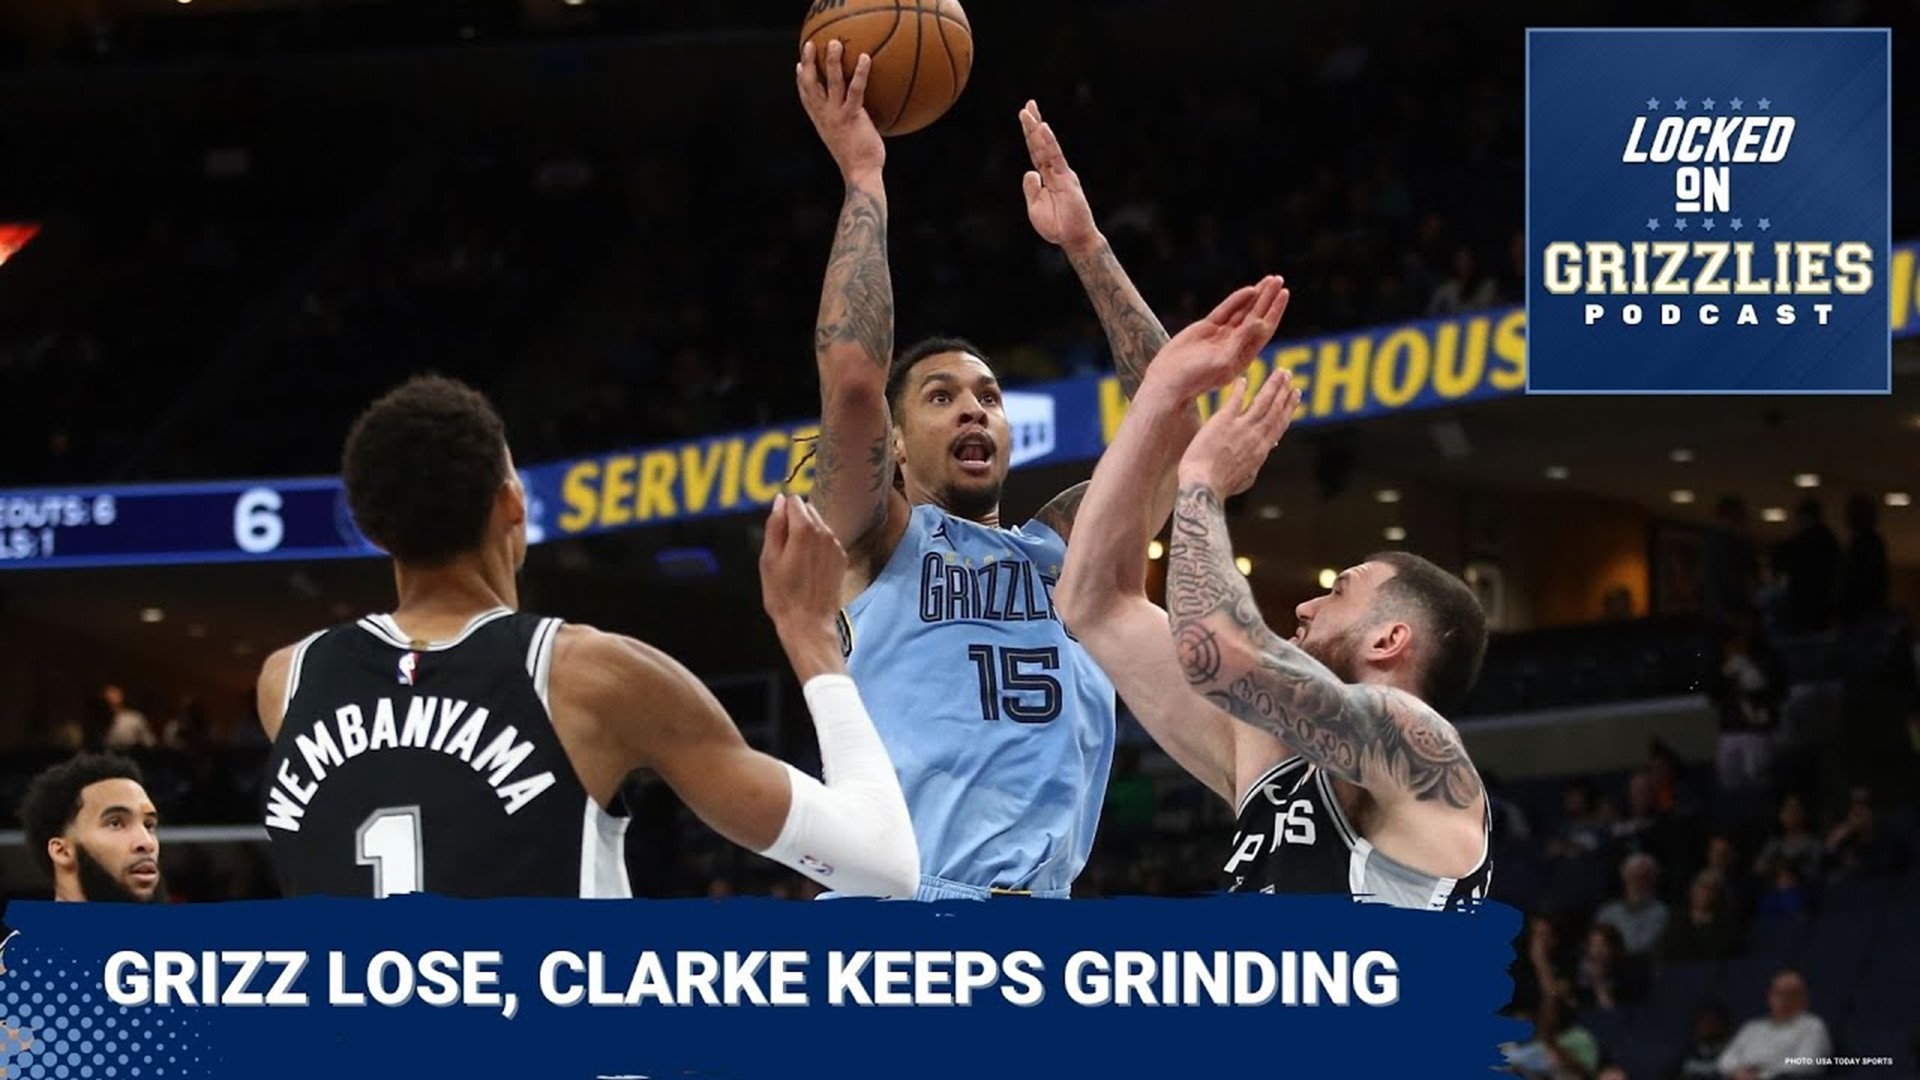 Memphis Grizzlies winning streak over Spurs ends - but Brandon Clarke's strong return continues